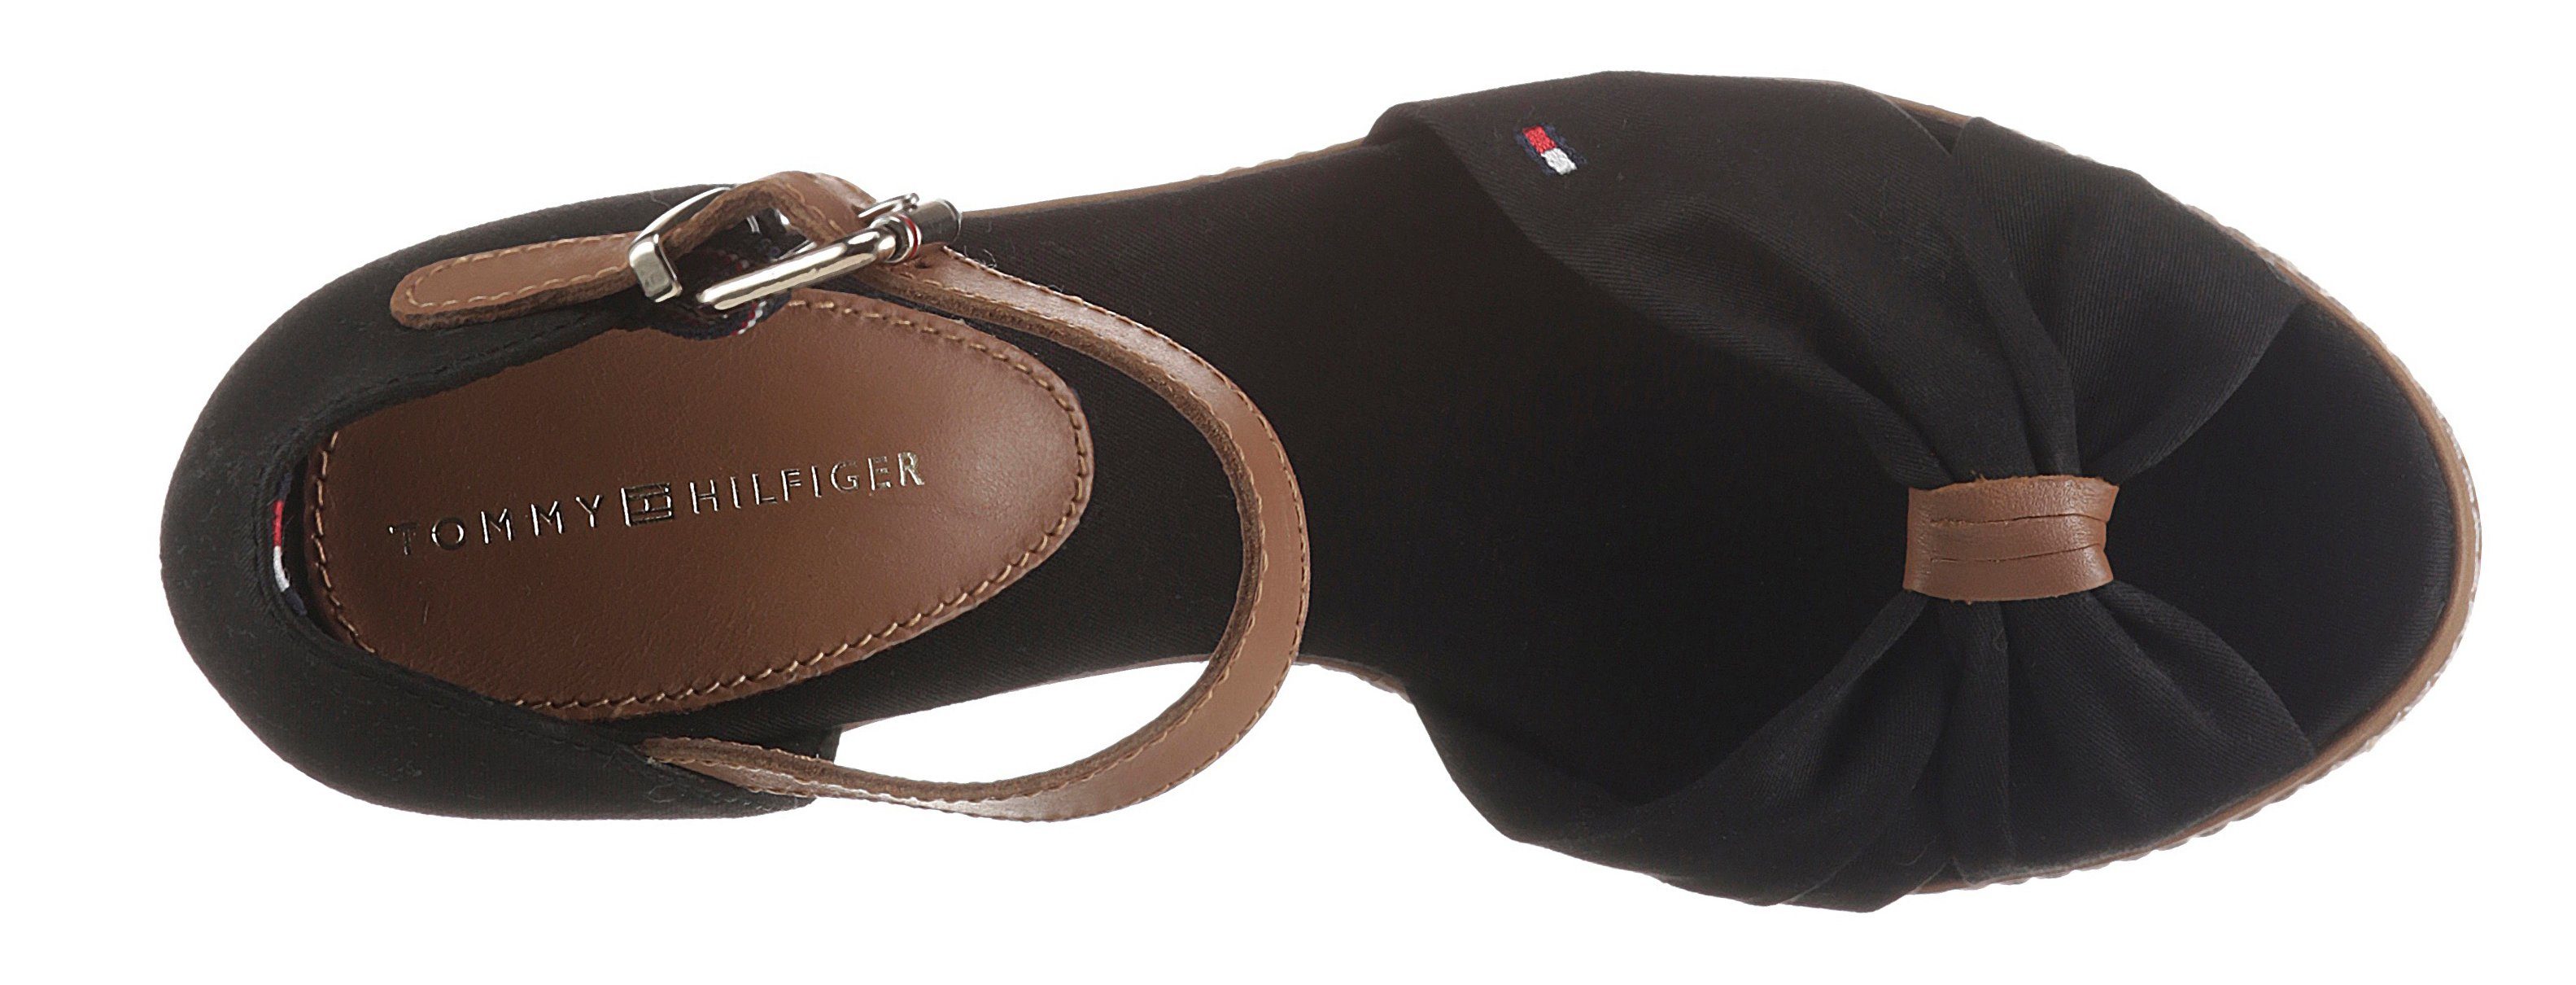 Tommy Hilfiger ICONIC ELENA BLACK Schnalle mit High-Heel-Sandalette SANDAL verstellbarer